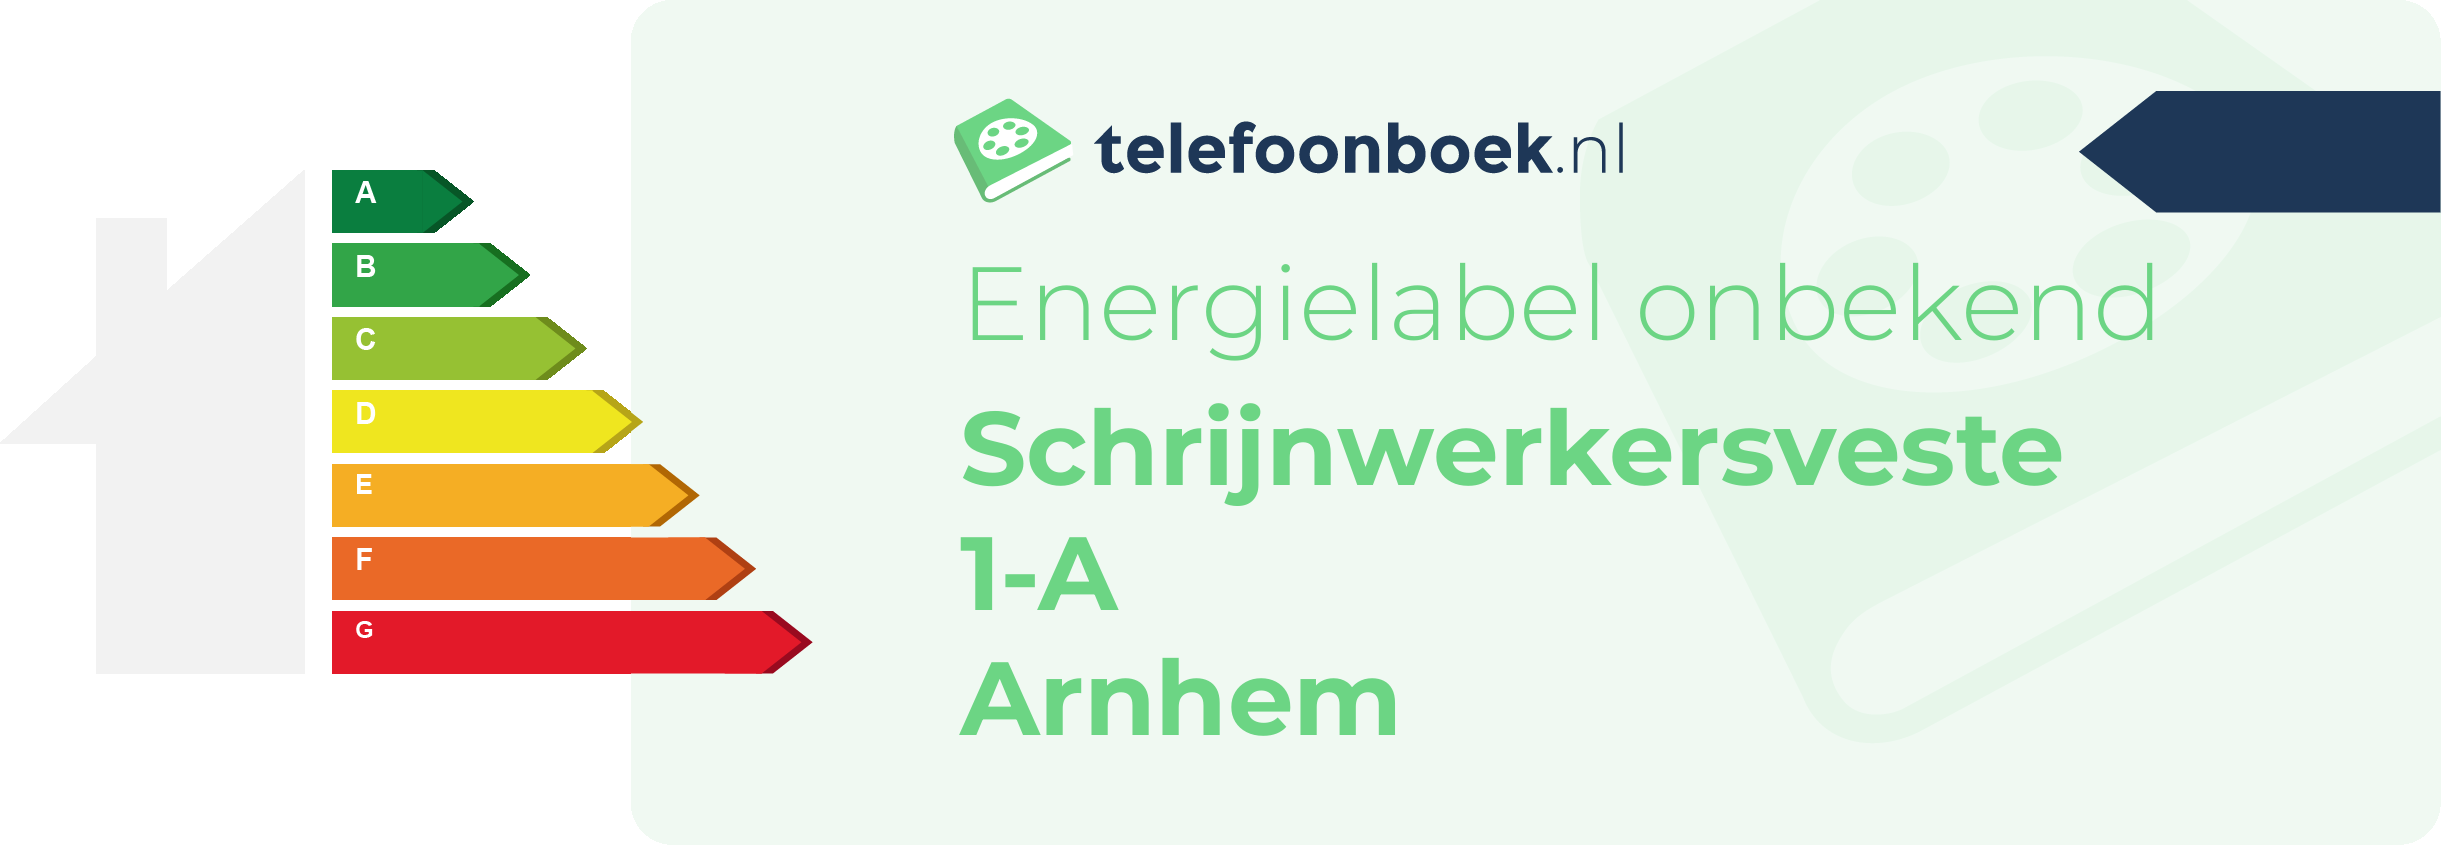 Energielabel Schrijnwerkersveste 1-A Arnhem